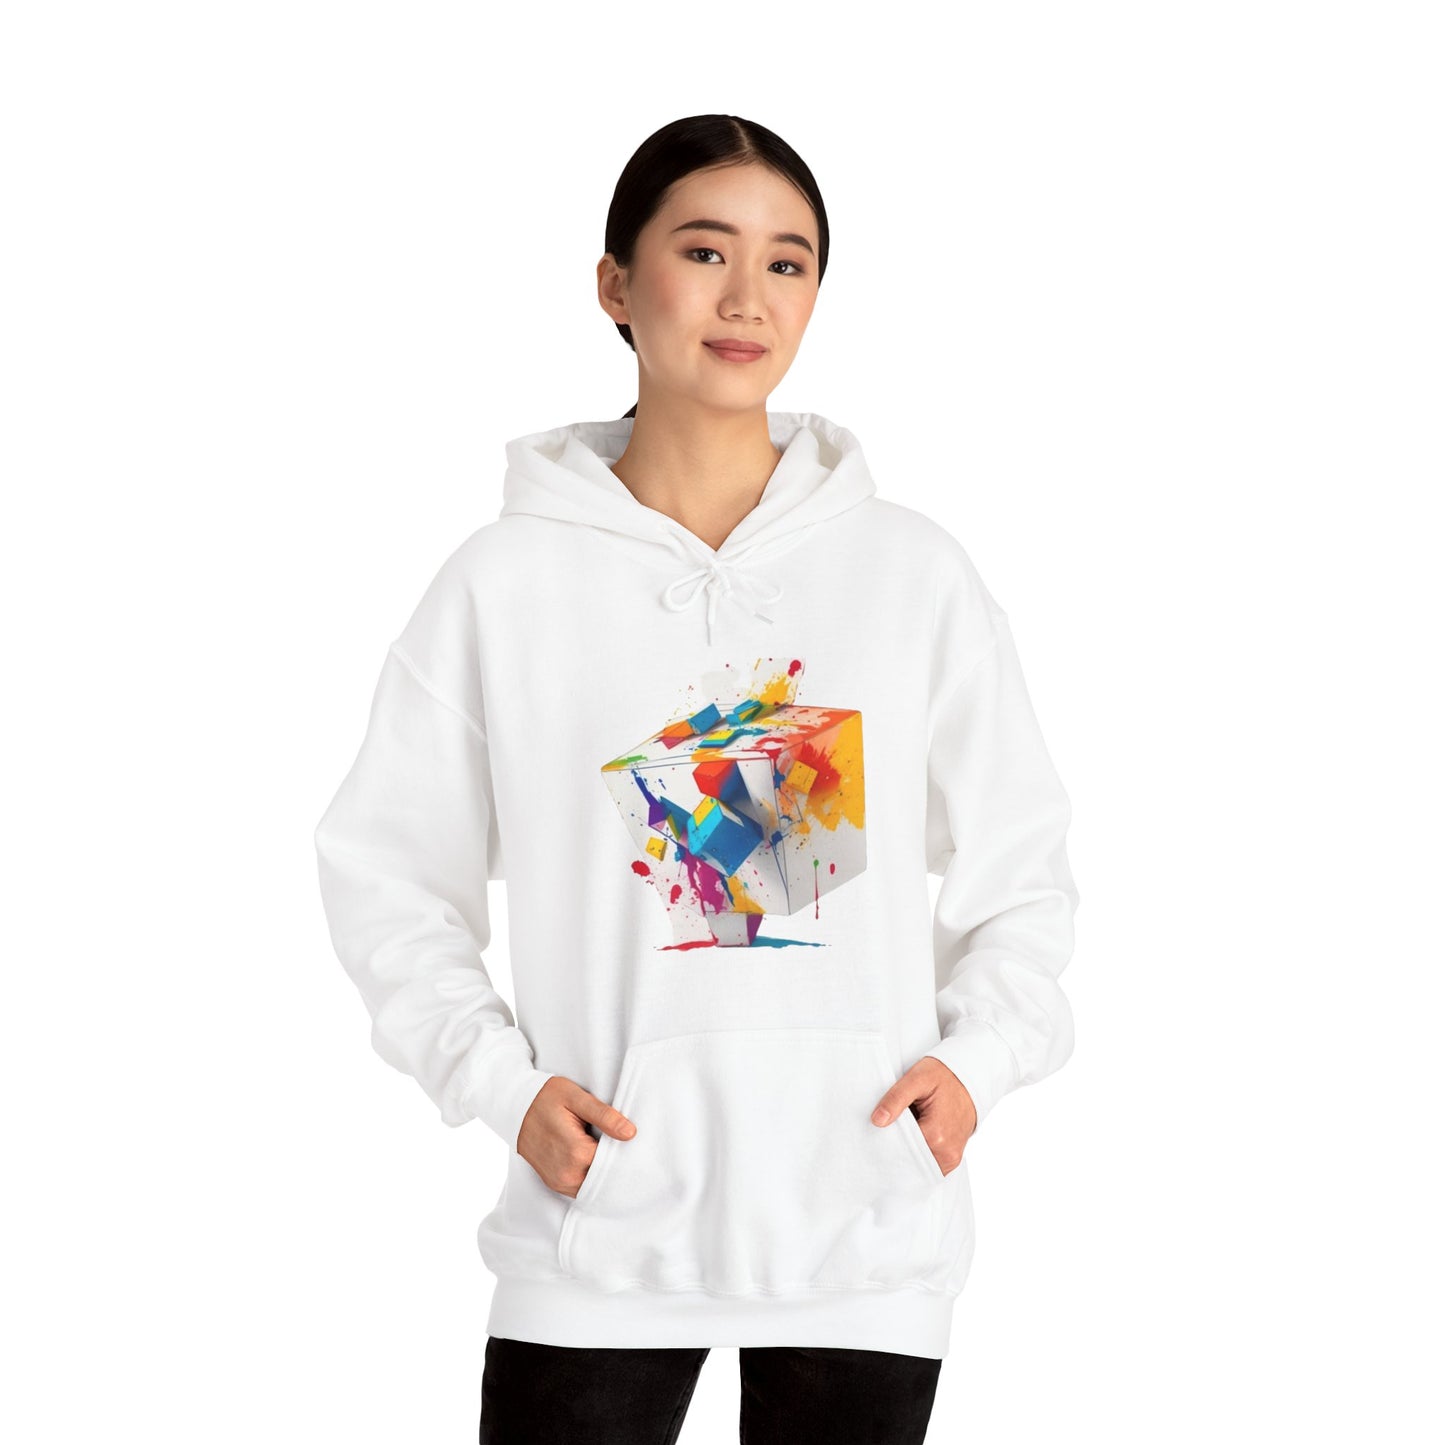 Colourful 3D Cube - Unisex Hooded Sweatshirt